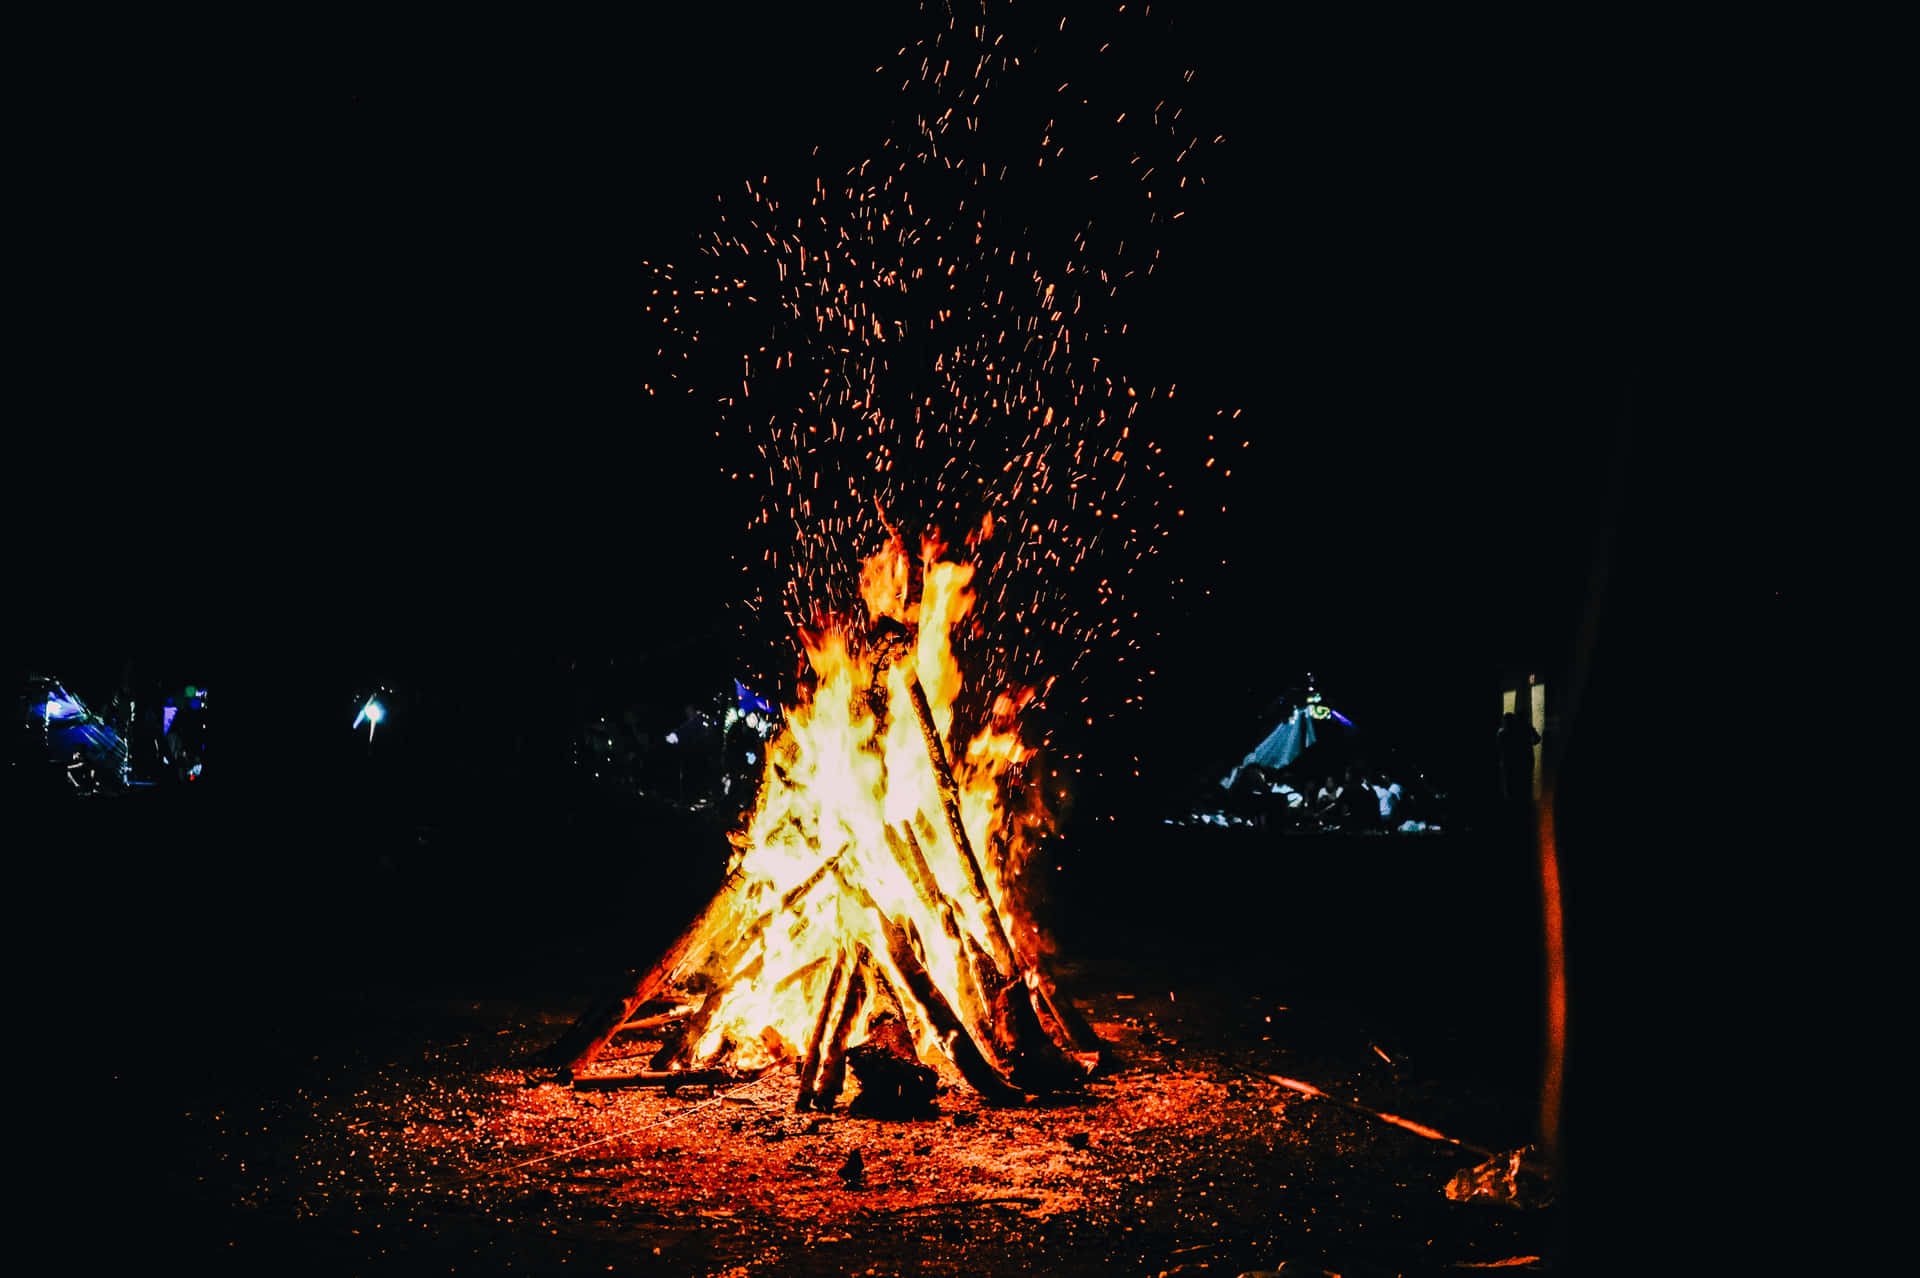 Enjoying a cozy evening by the warm bonfire